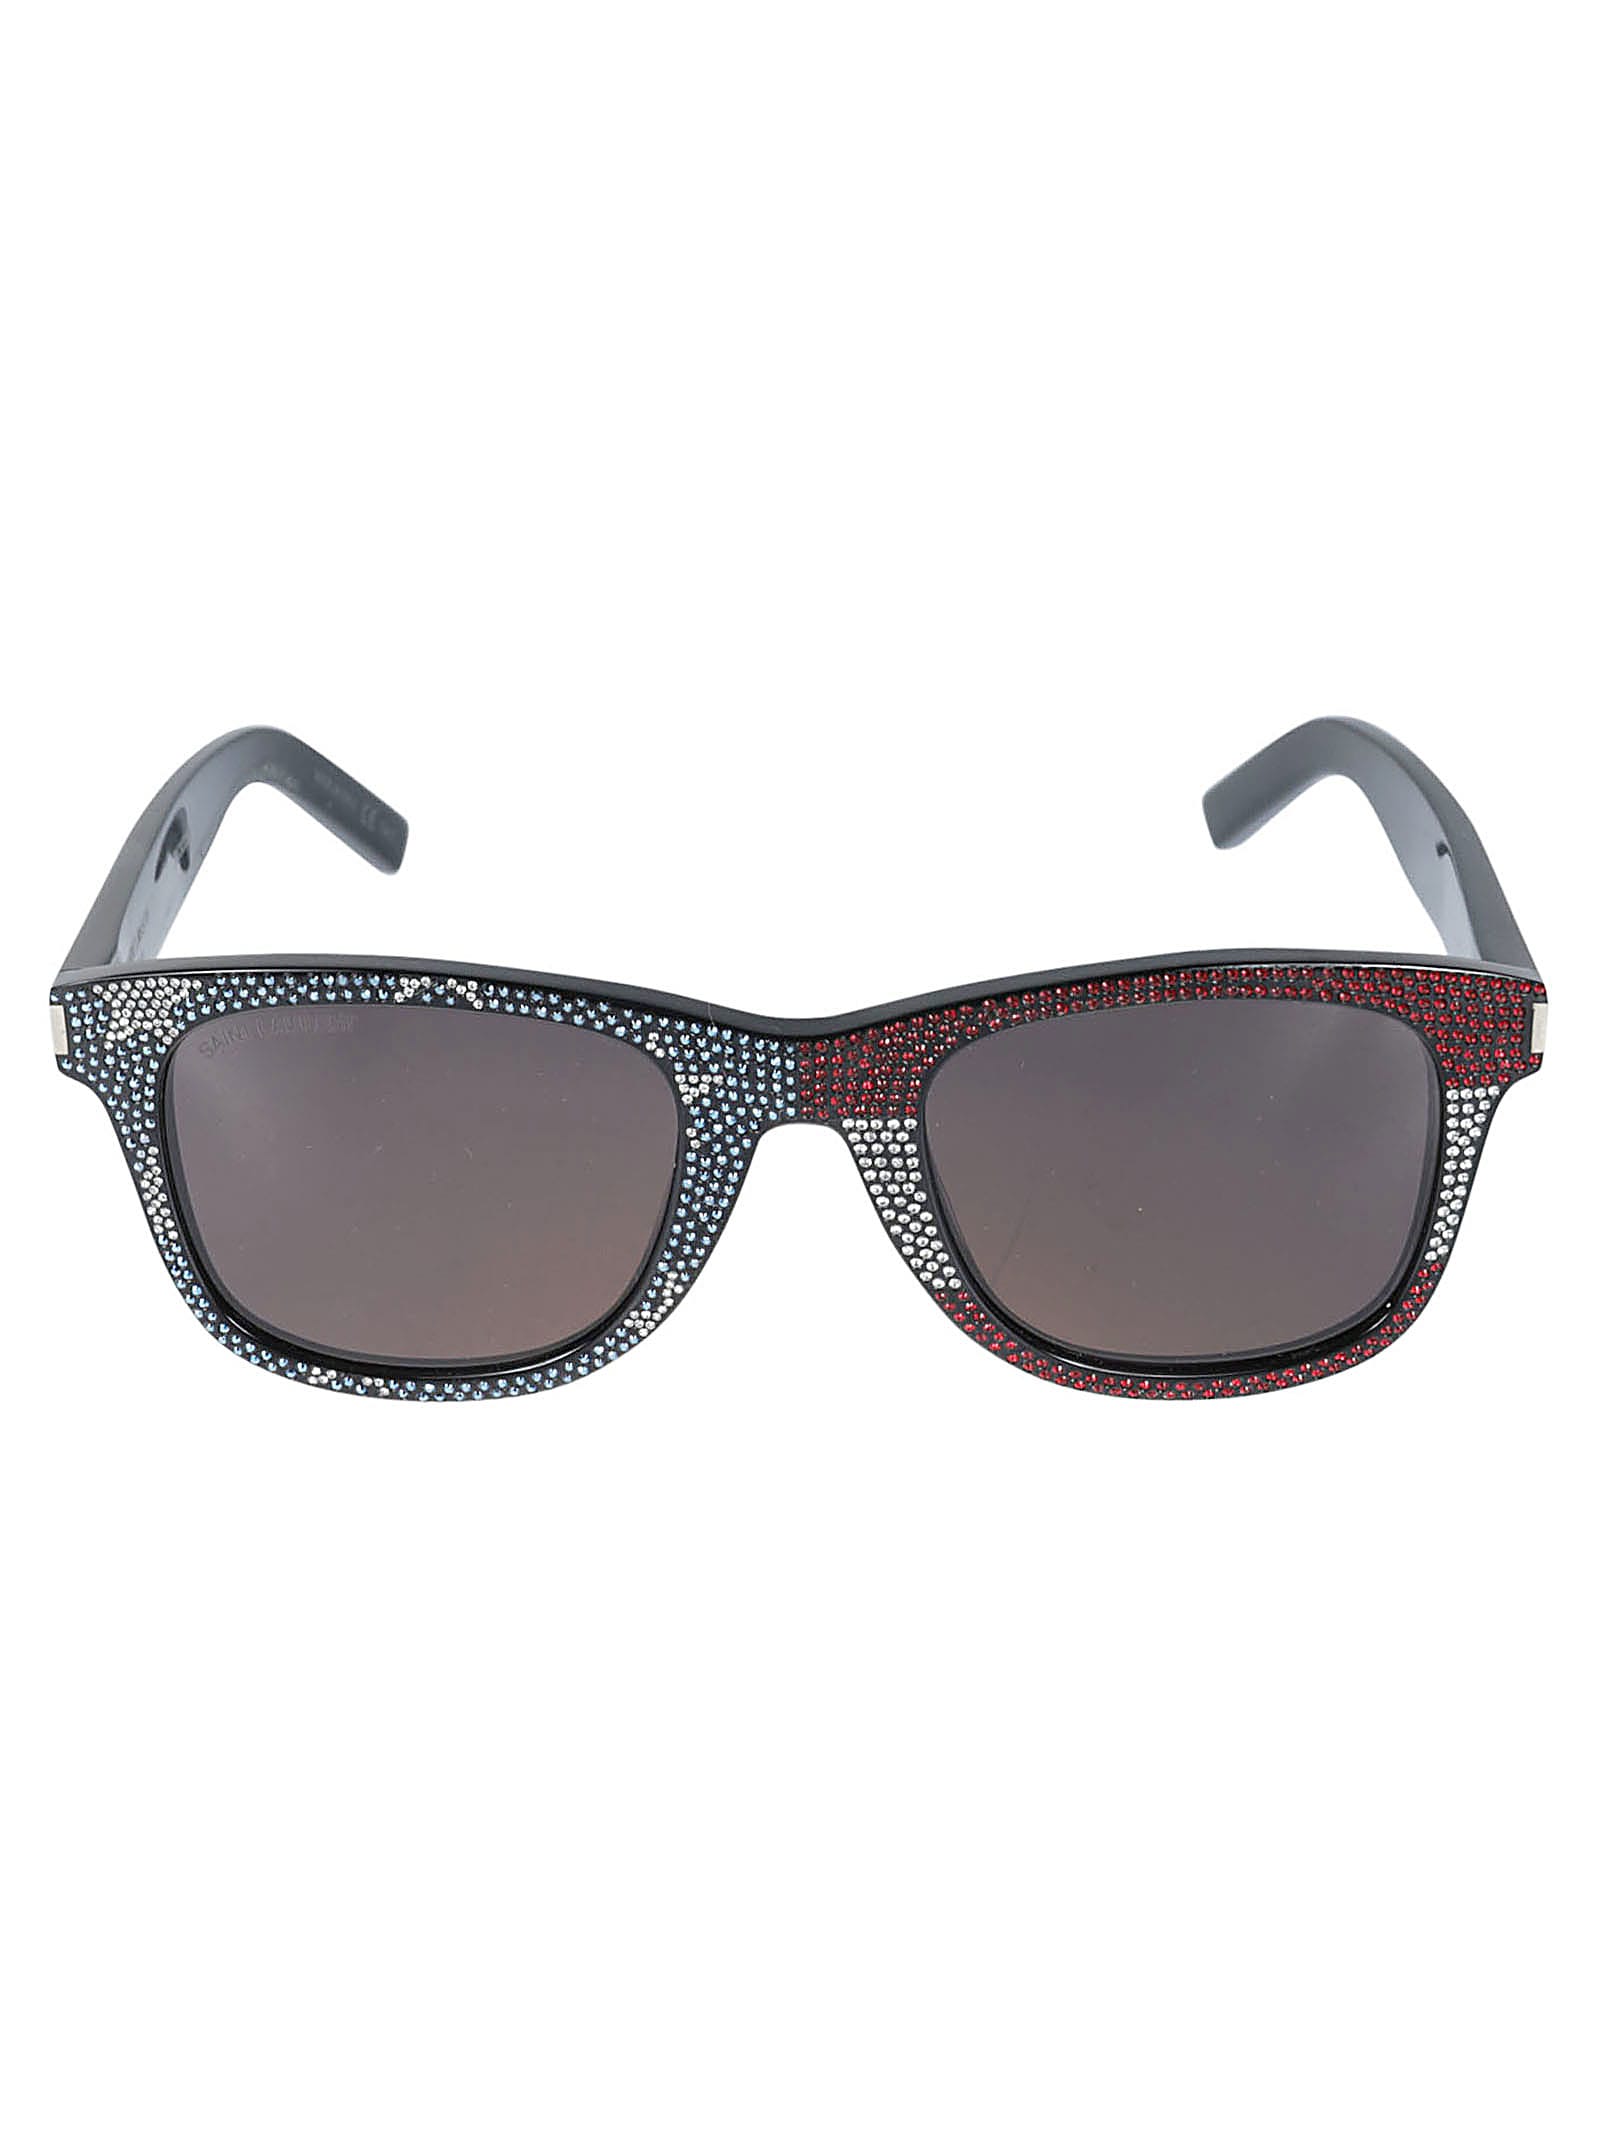 Saint Laurent Eyewear Square Frame Studded Sunglasses